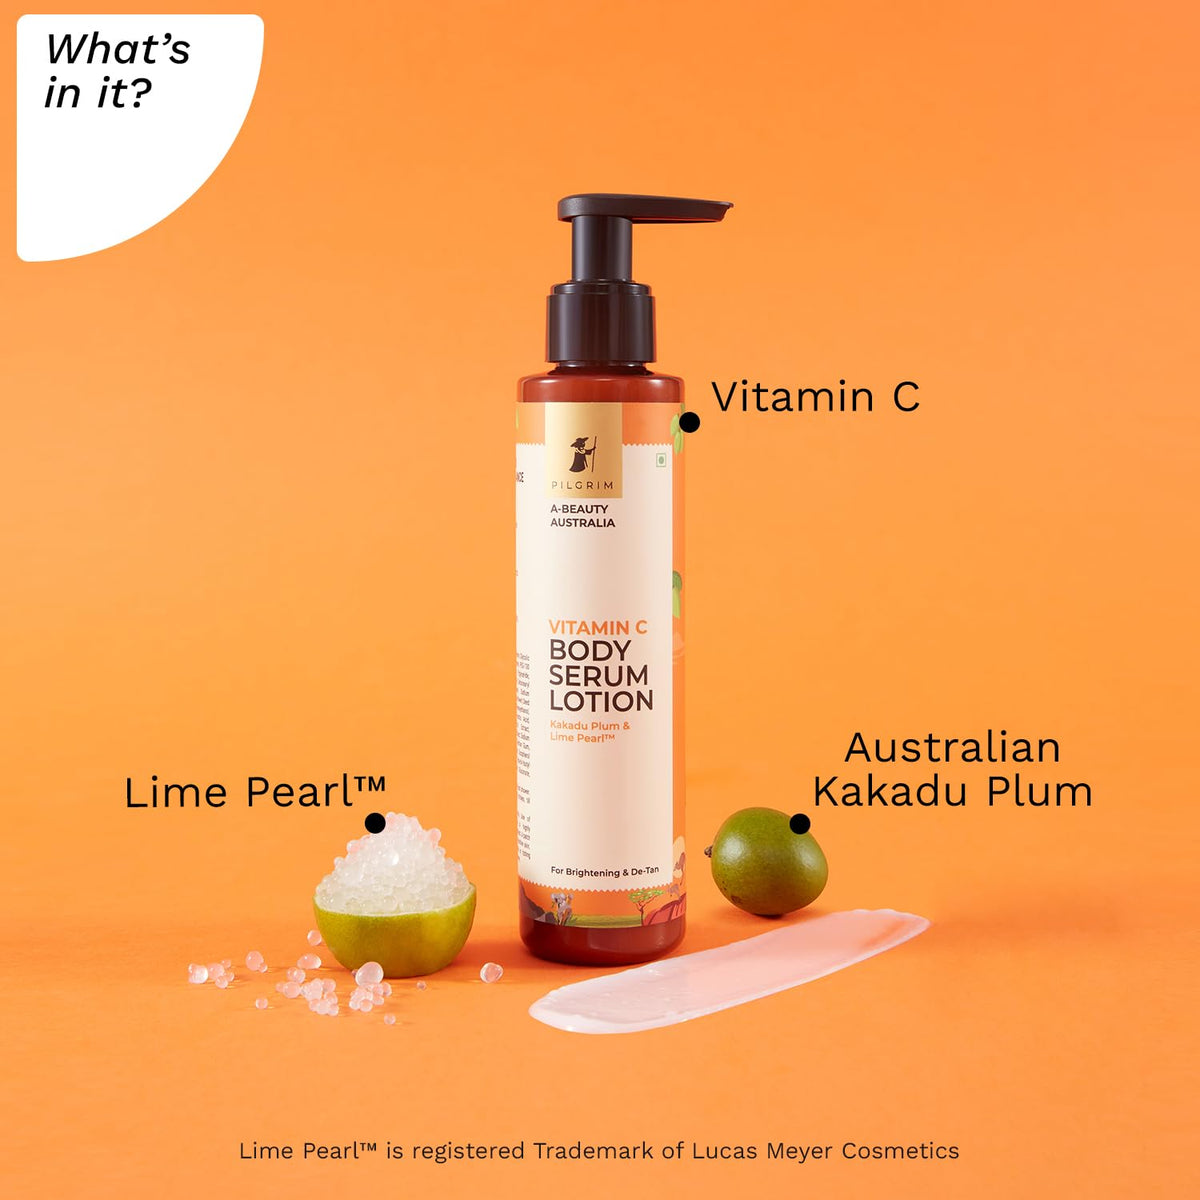 Pilgrim Australian Vitamin C Body Serum Lotion for dry skin with Kakadu Plum & Lime Pearl-Fades dark spots & evens skin tone for brightening & detan-For women and men-150 ml